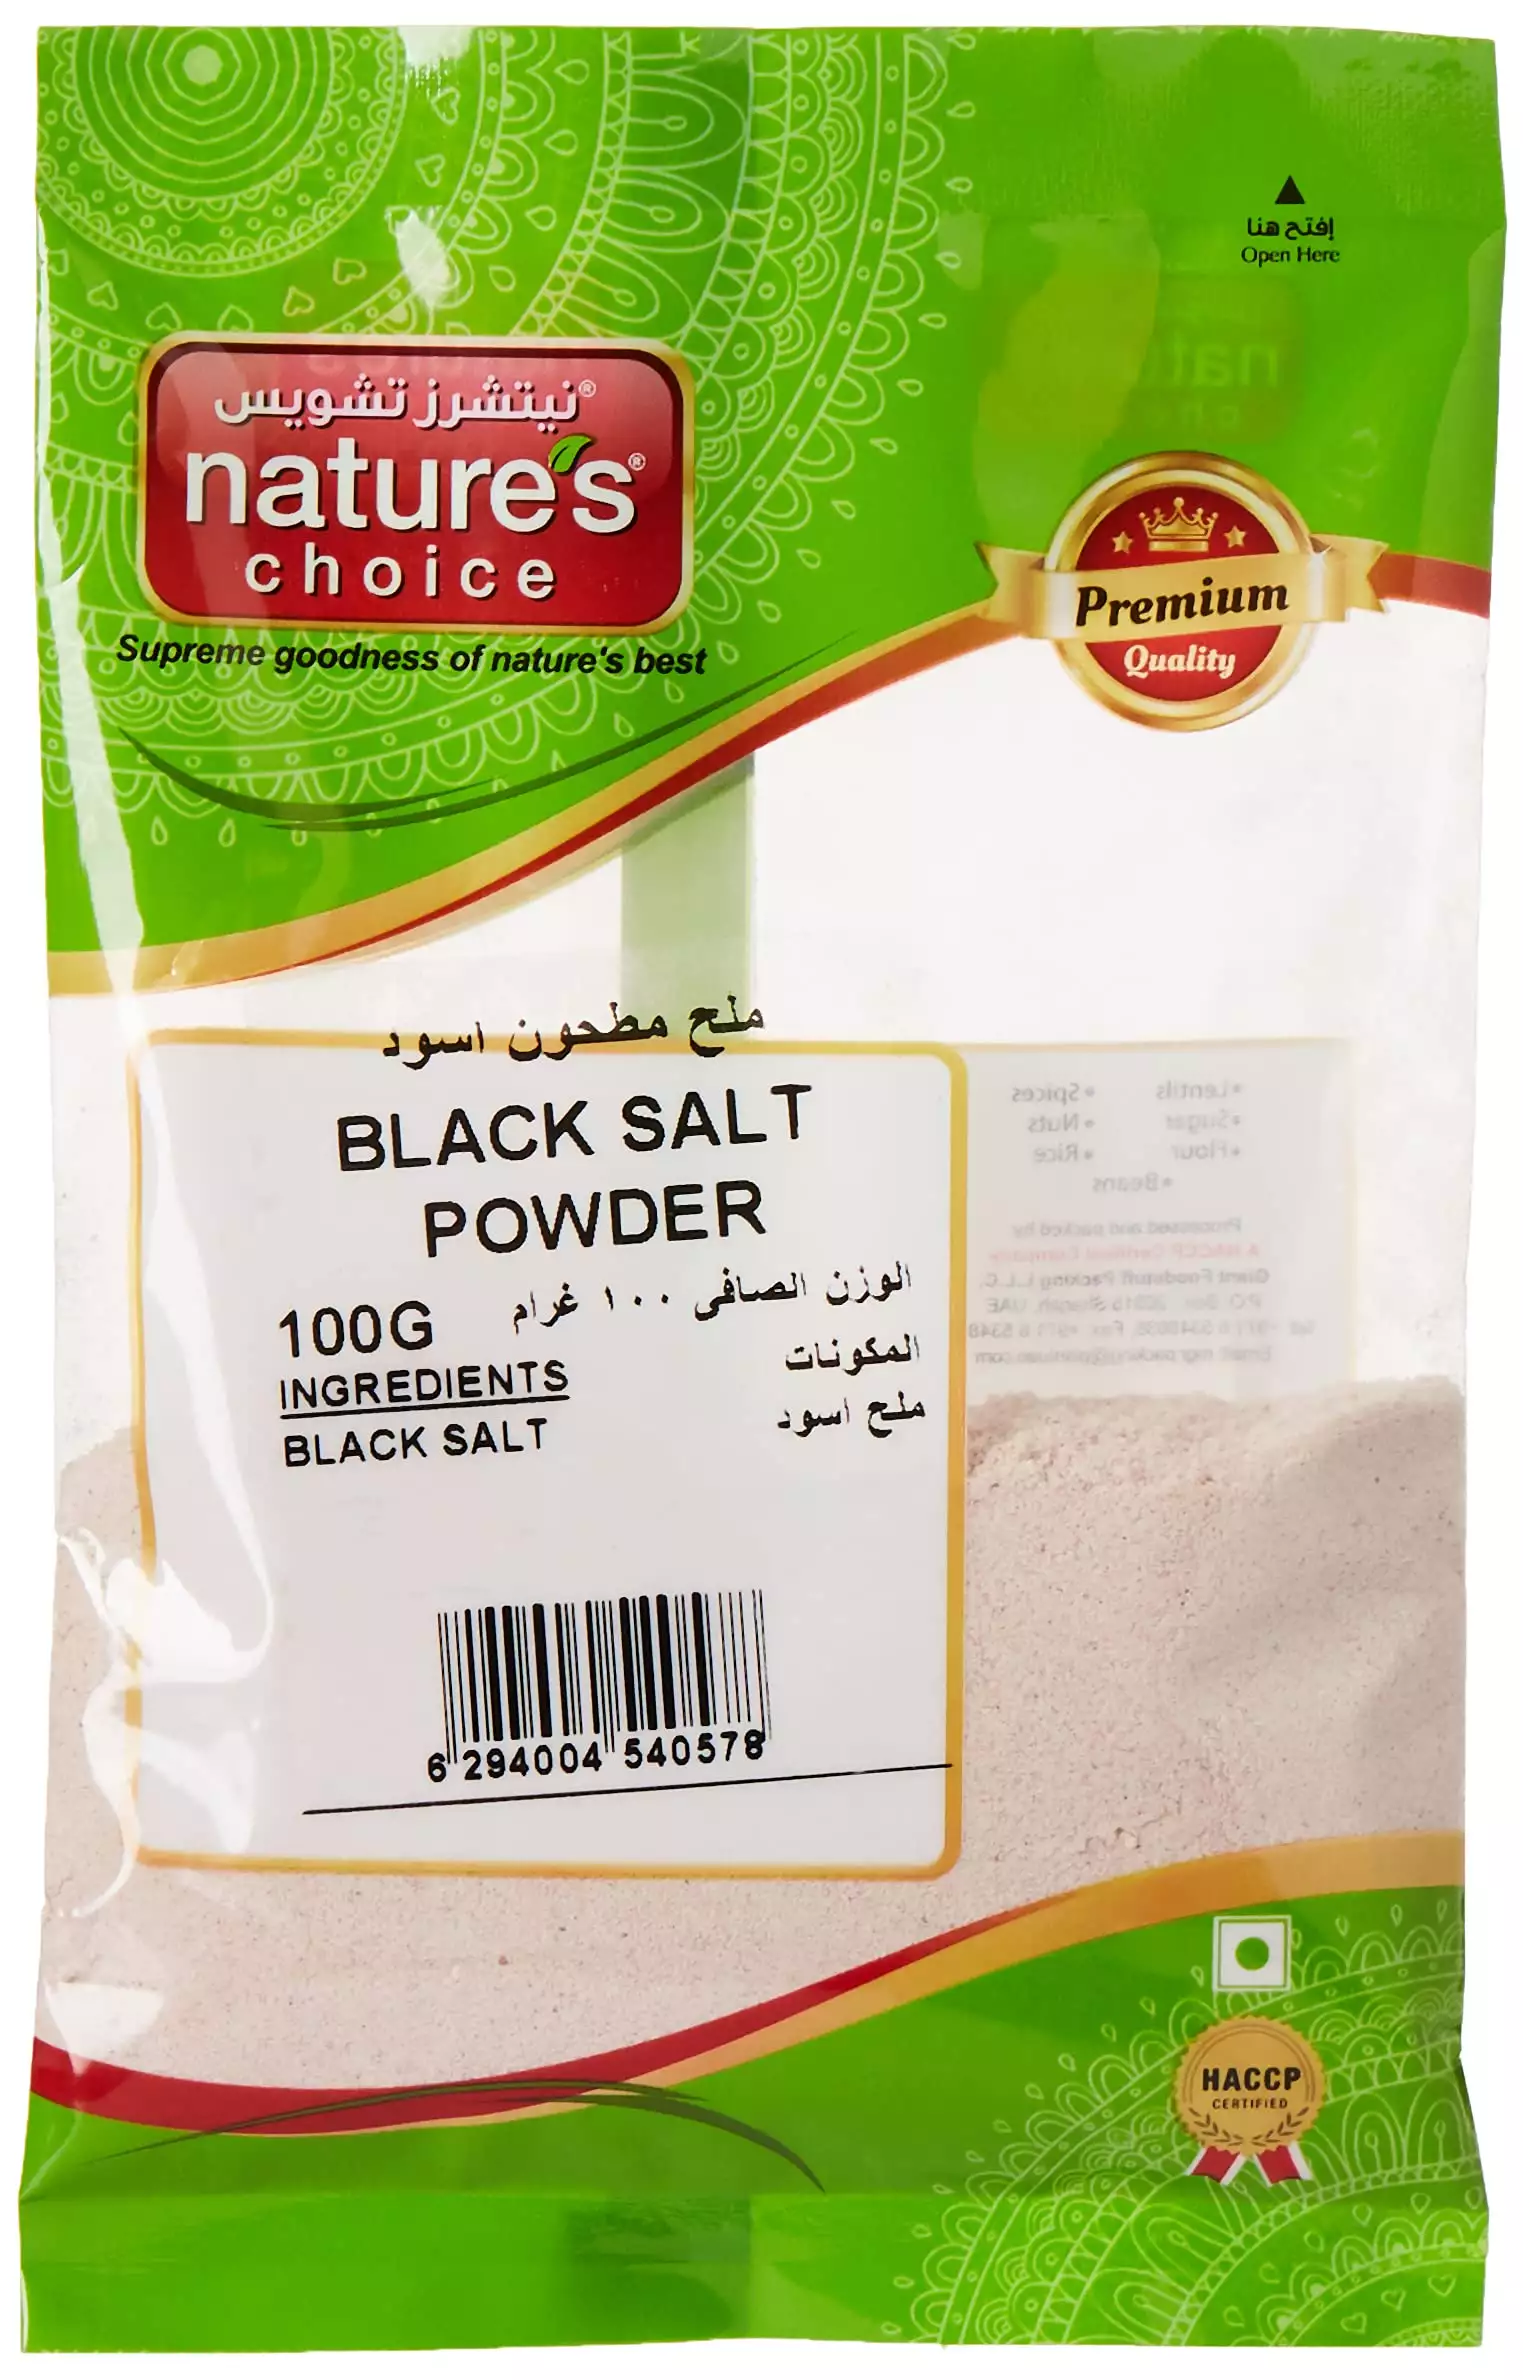 NATURES CHOICE BLACK SALT POWDER 100G